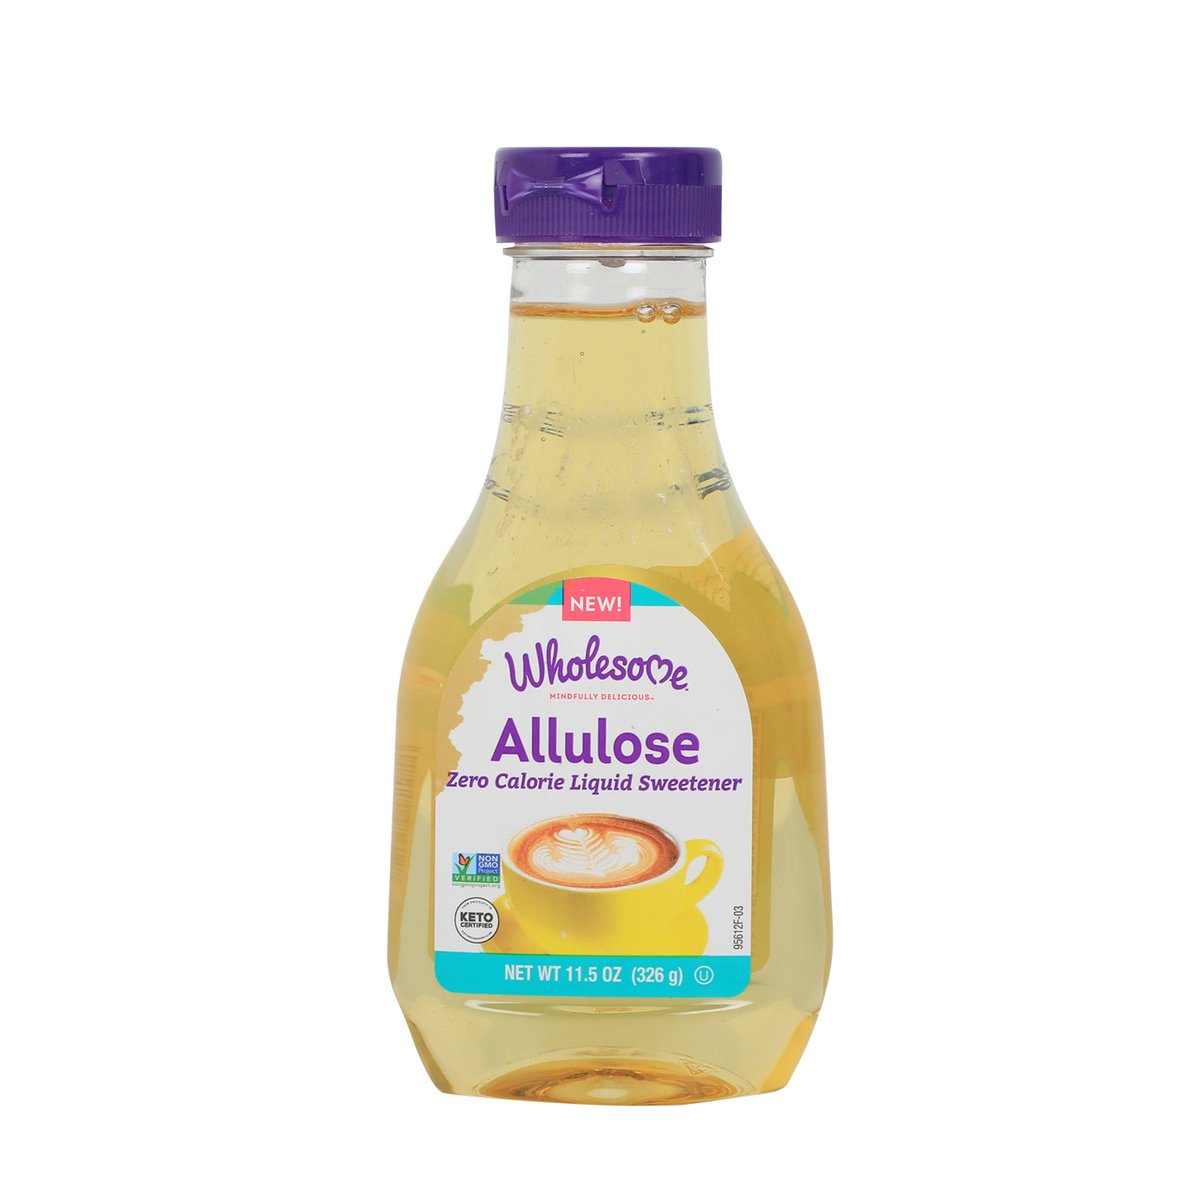 Wholesome Allulose Zero Calorie Liquid Sweetener 326g